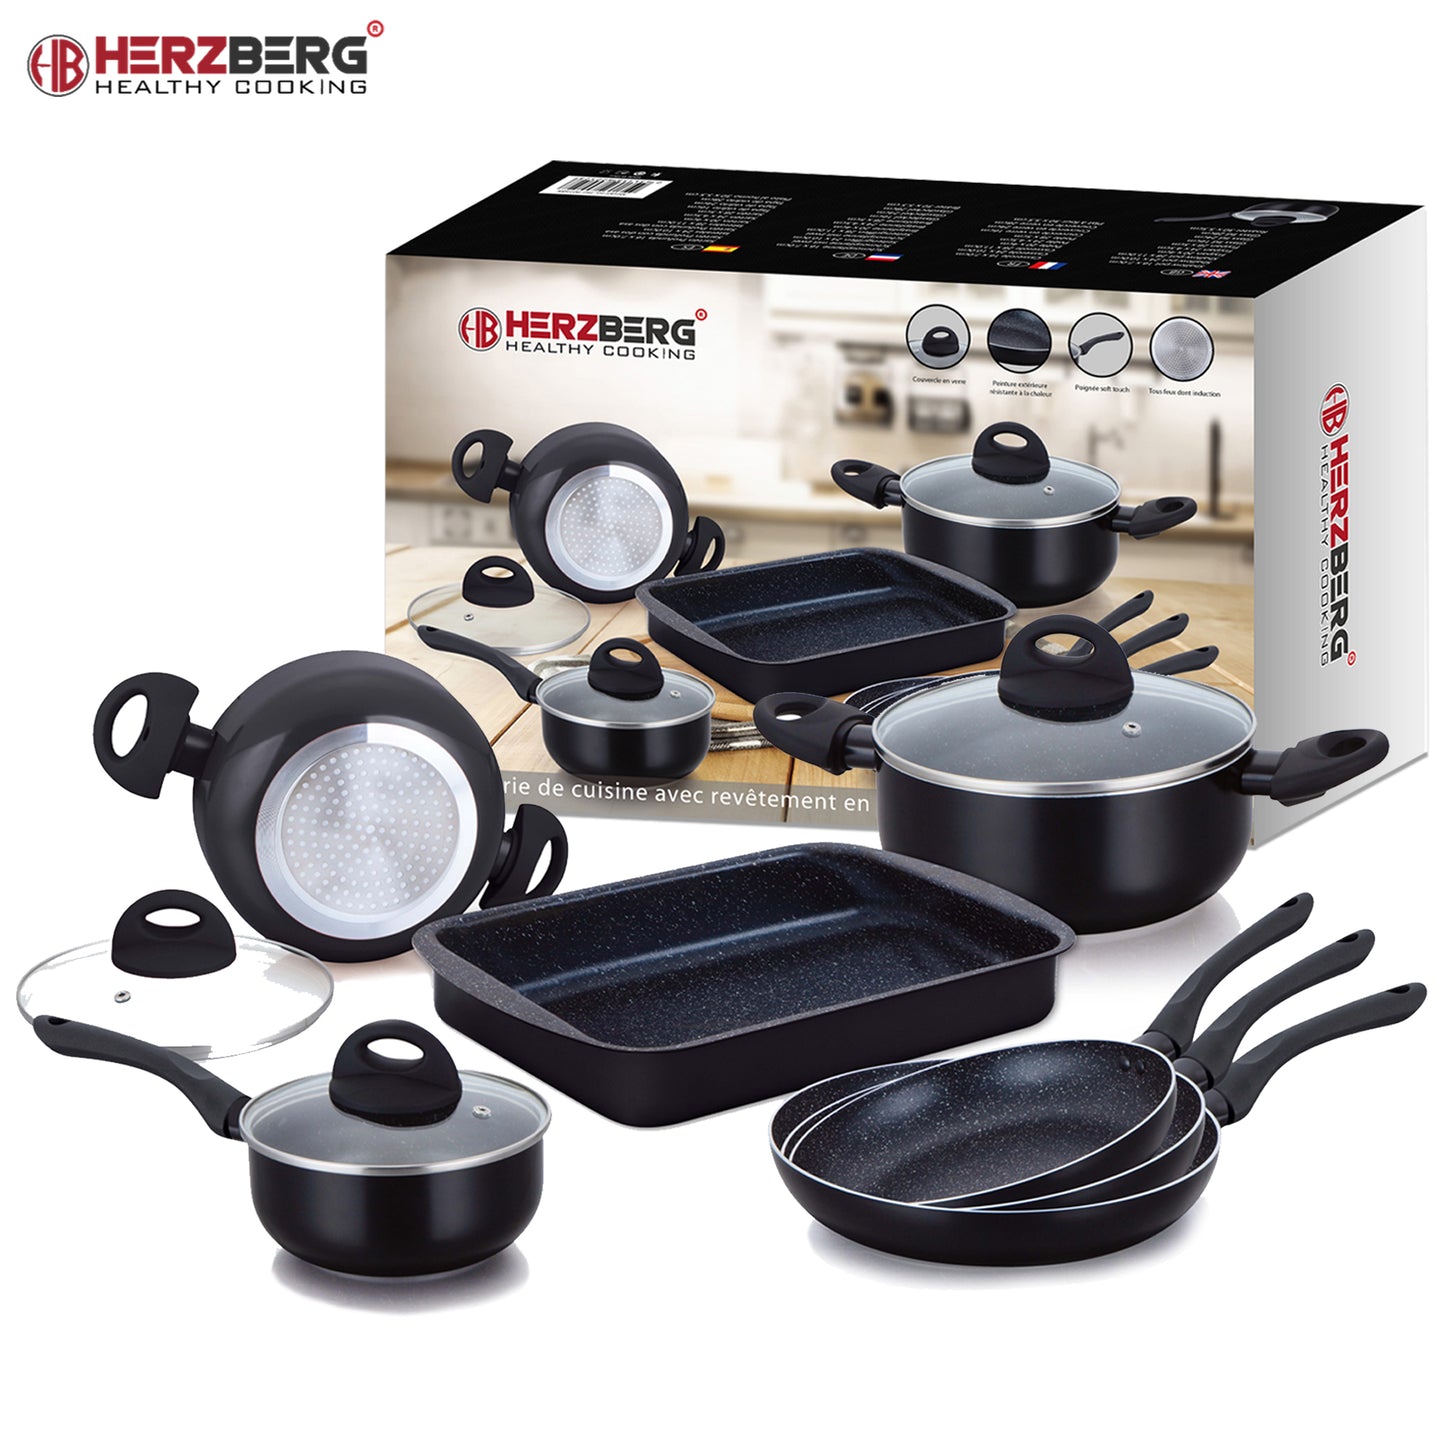 Herzberg 10 Pieces Marble Coated Cookware Set - Black